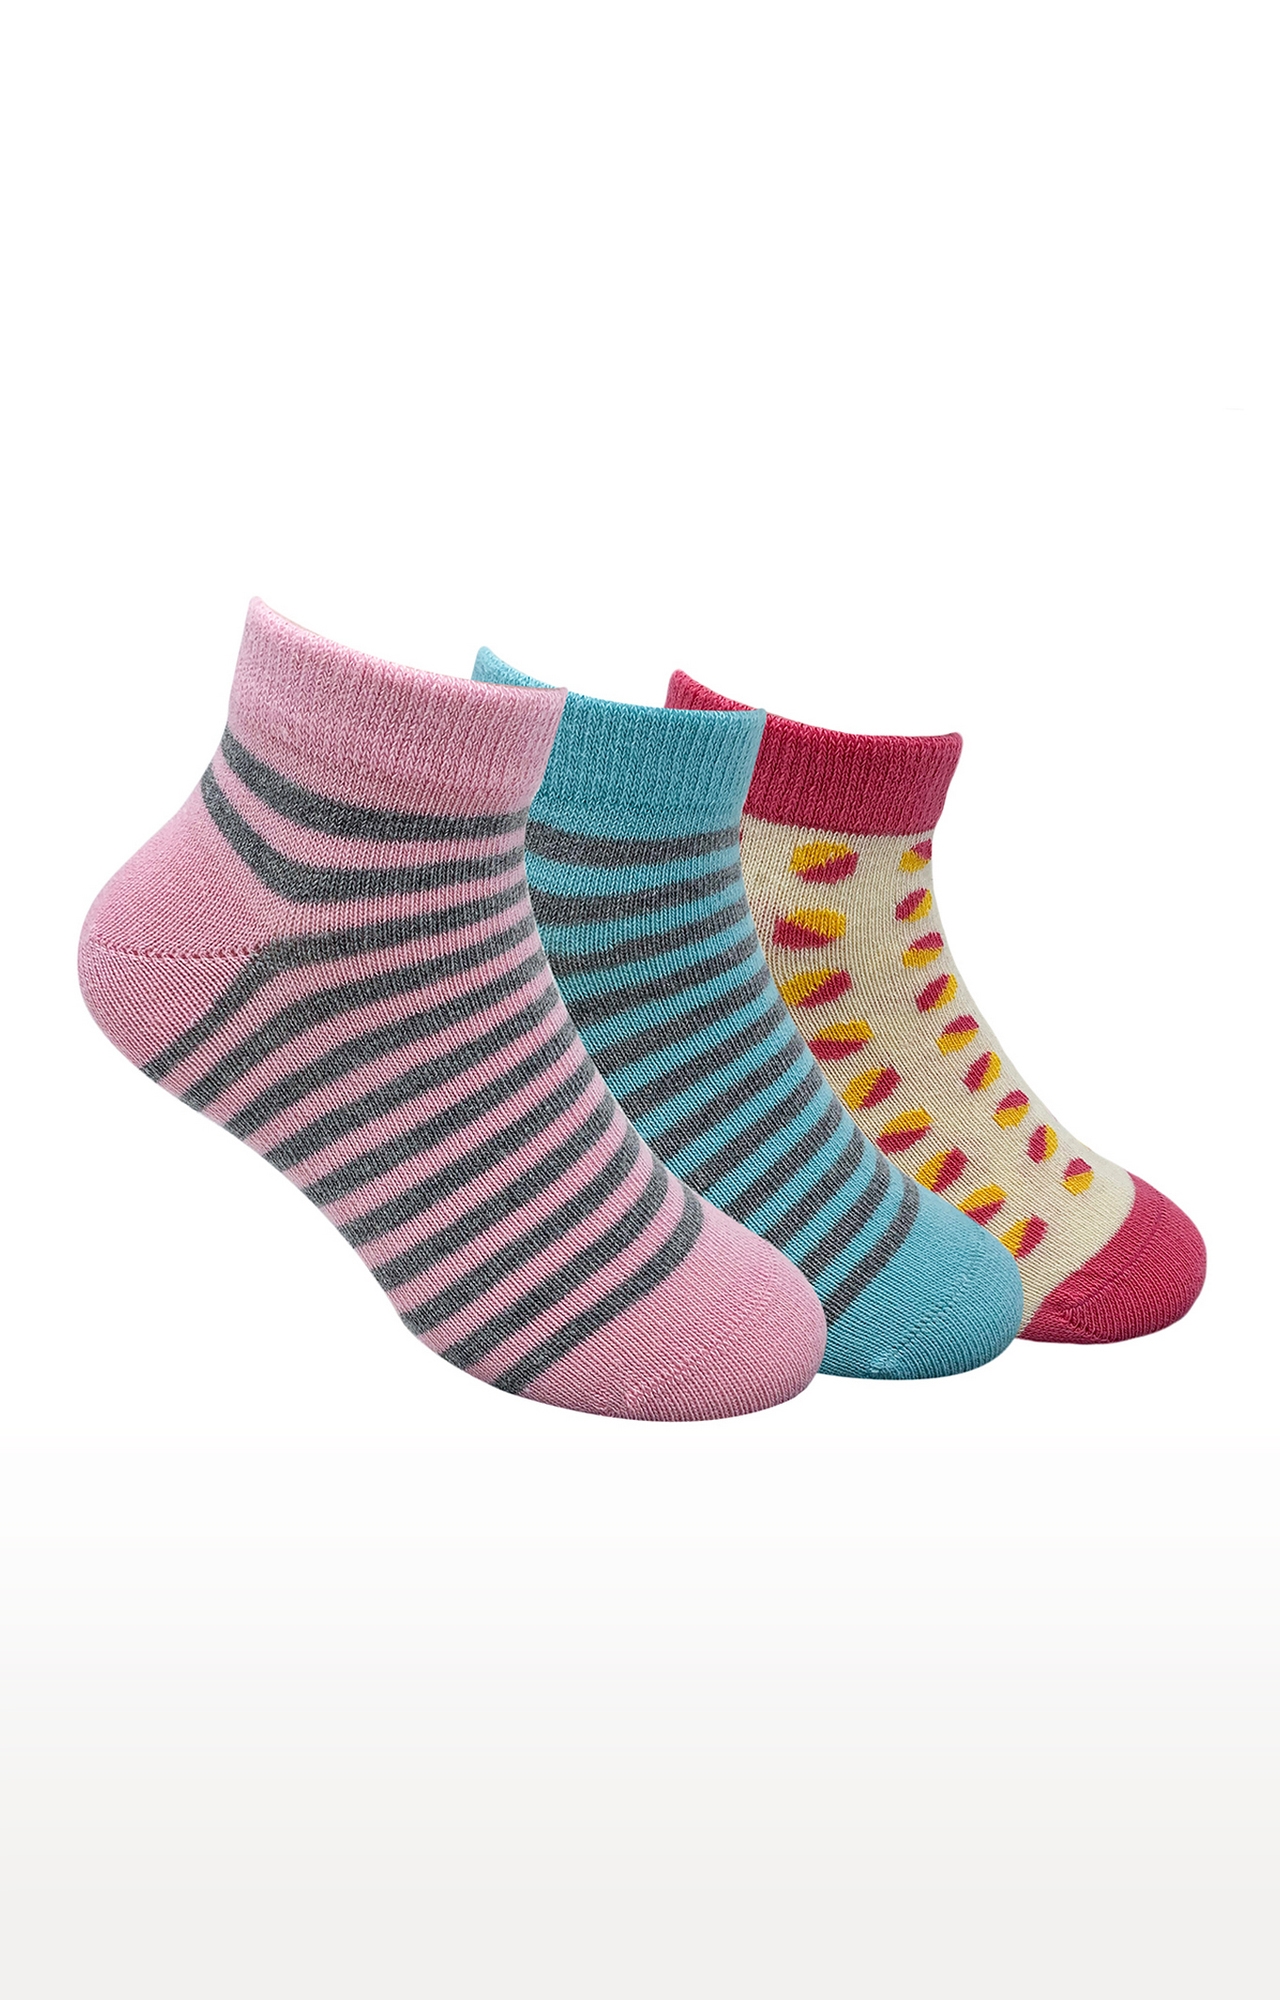 Mint & Oak Dots & Stripe Cotton Multi Ankle Length Socks for Kids - Pack of 3